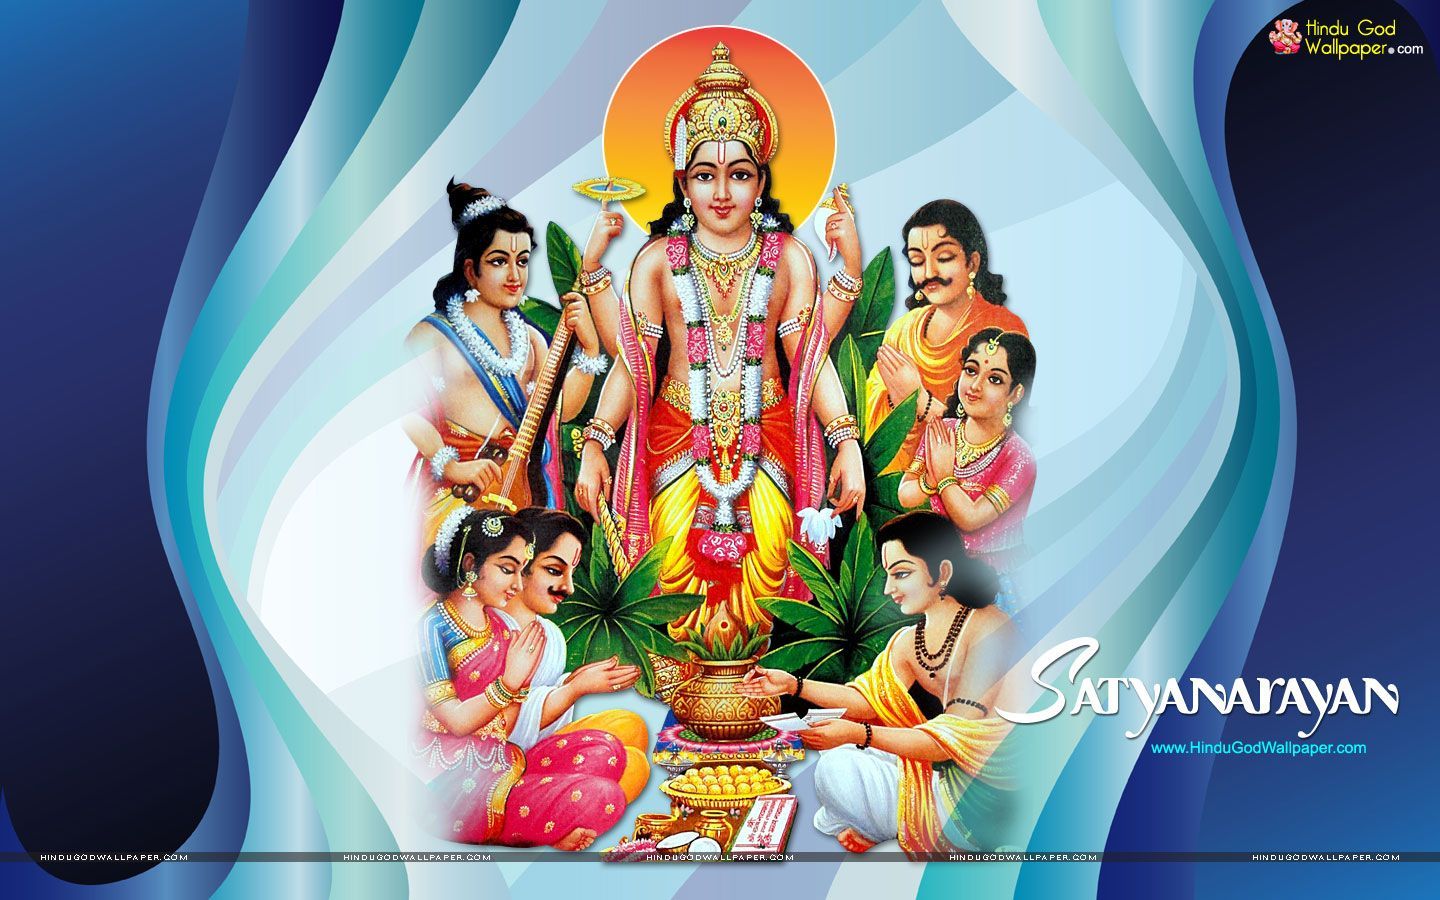 Shri Satyanarayan Wallpaper Free .com